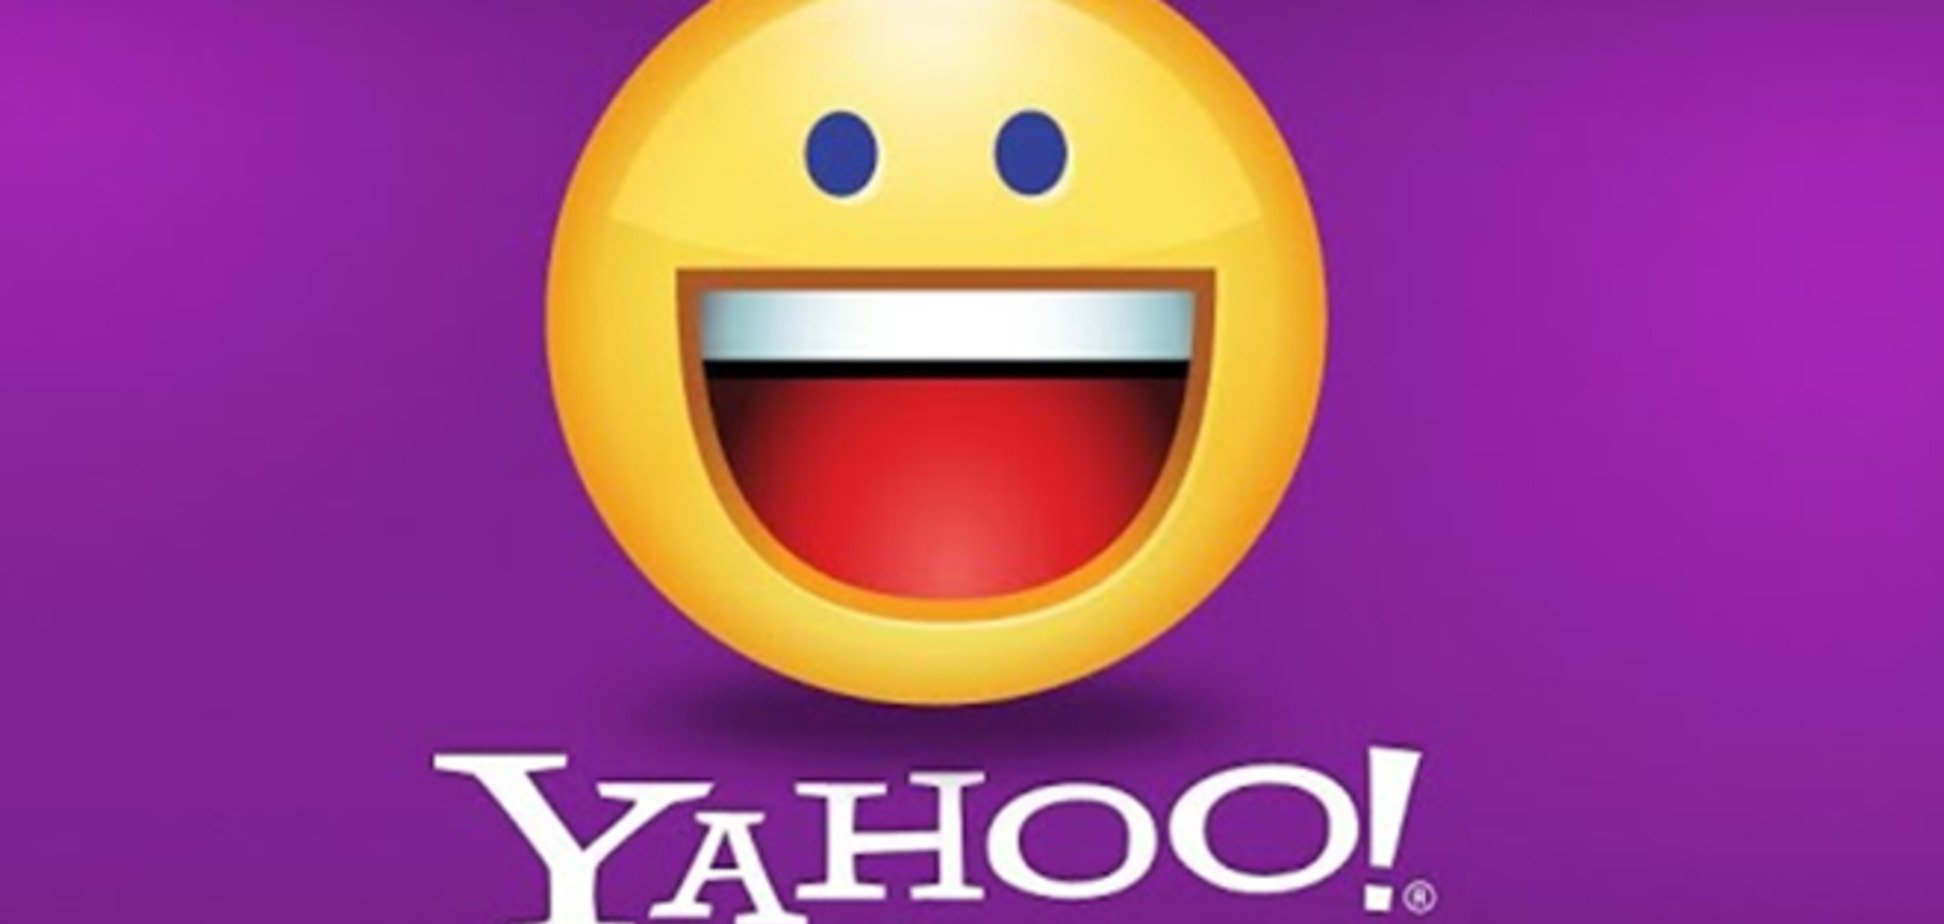 Yahoo! выкупает свои акции у Third Point